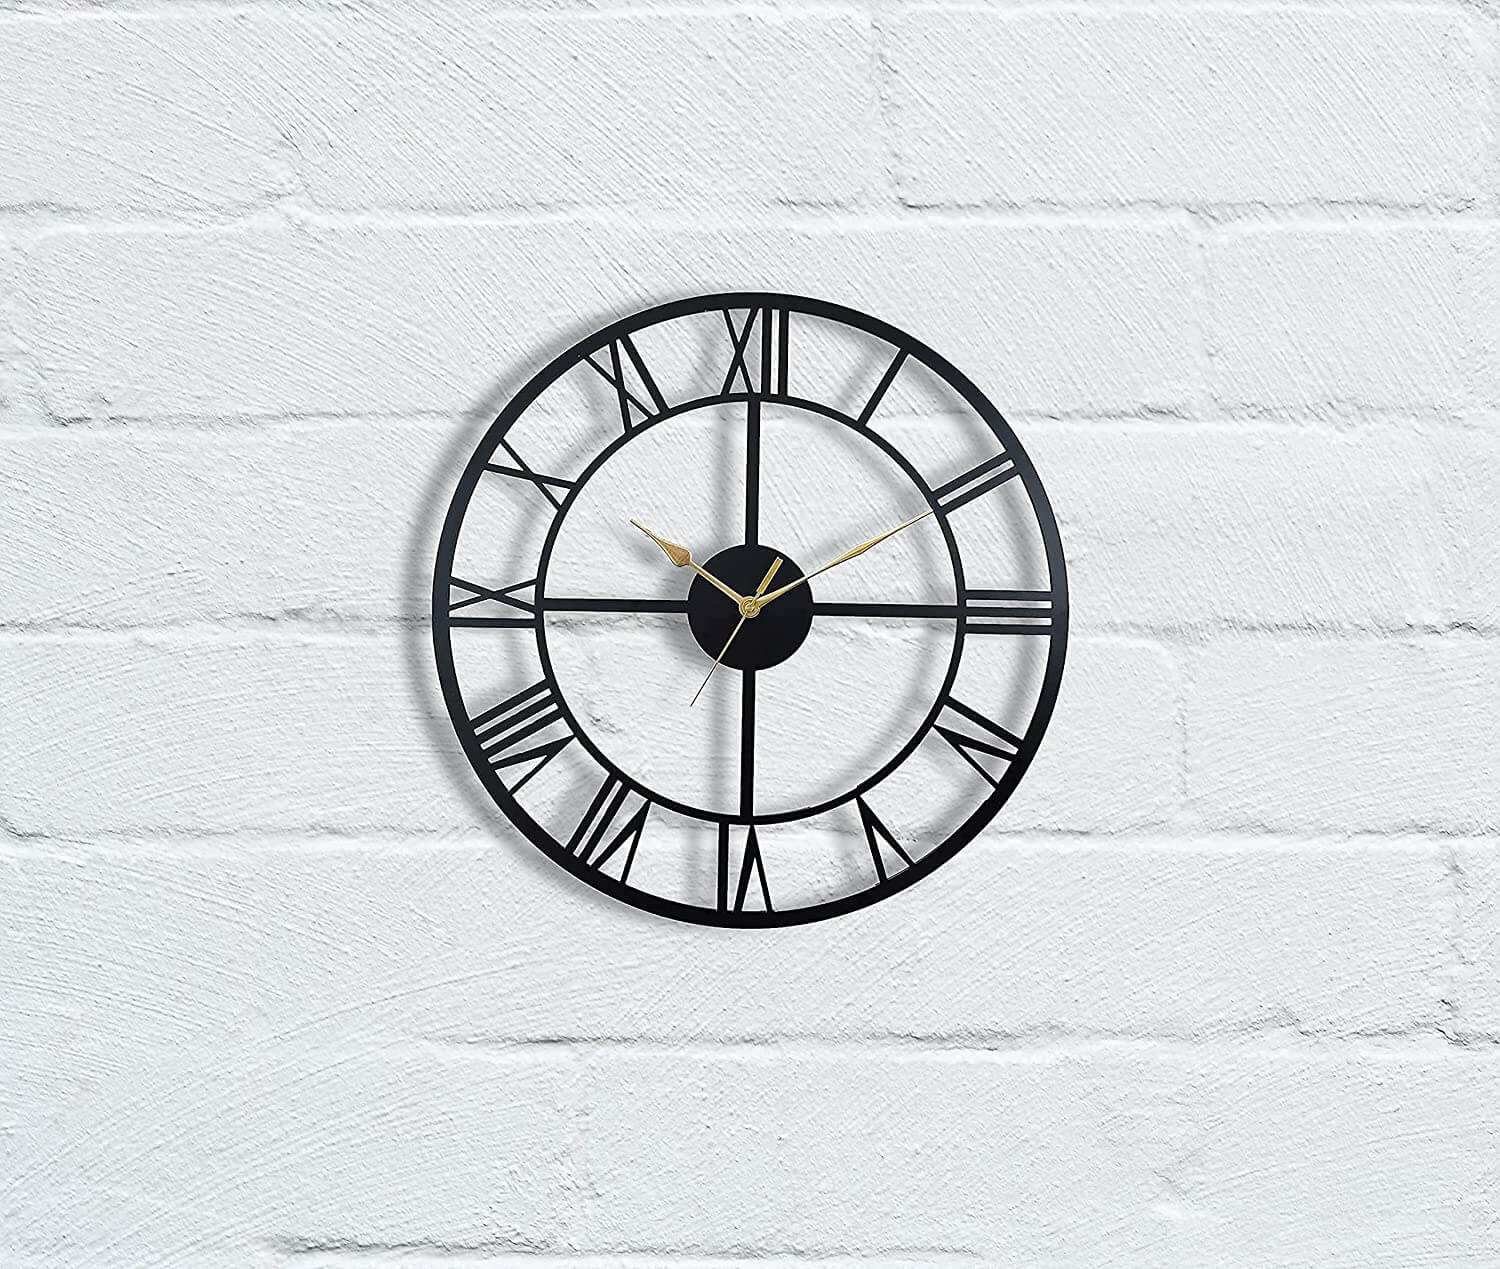 Large Vintage Wall Clocks, Telegraph Clock